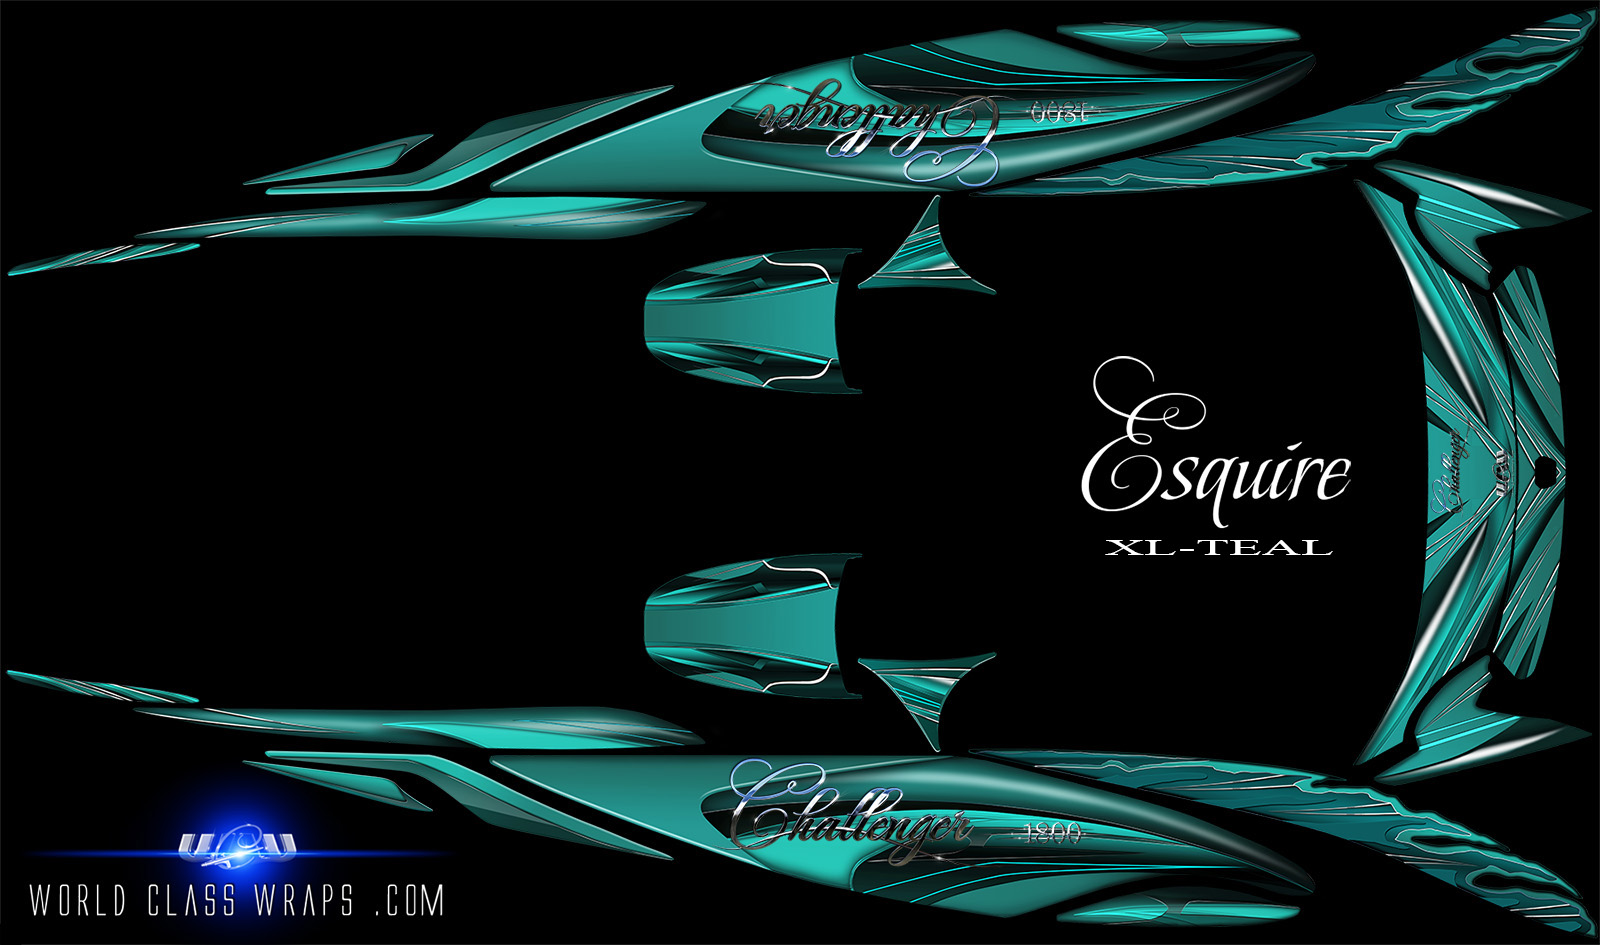 seadoo XL Esquire challenger jet boat graphics